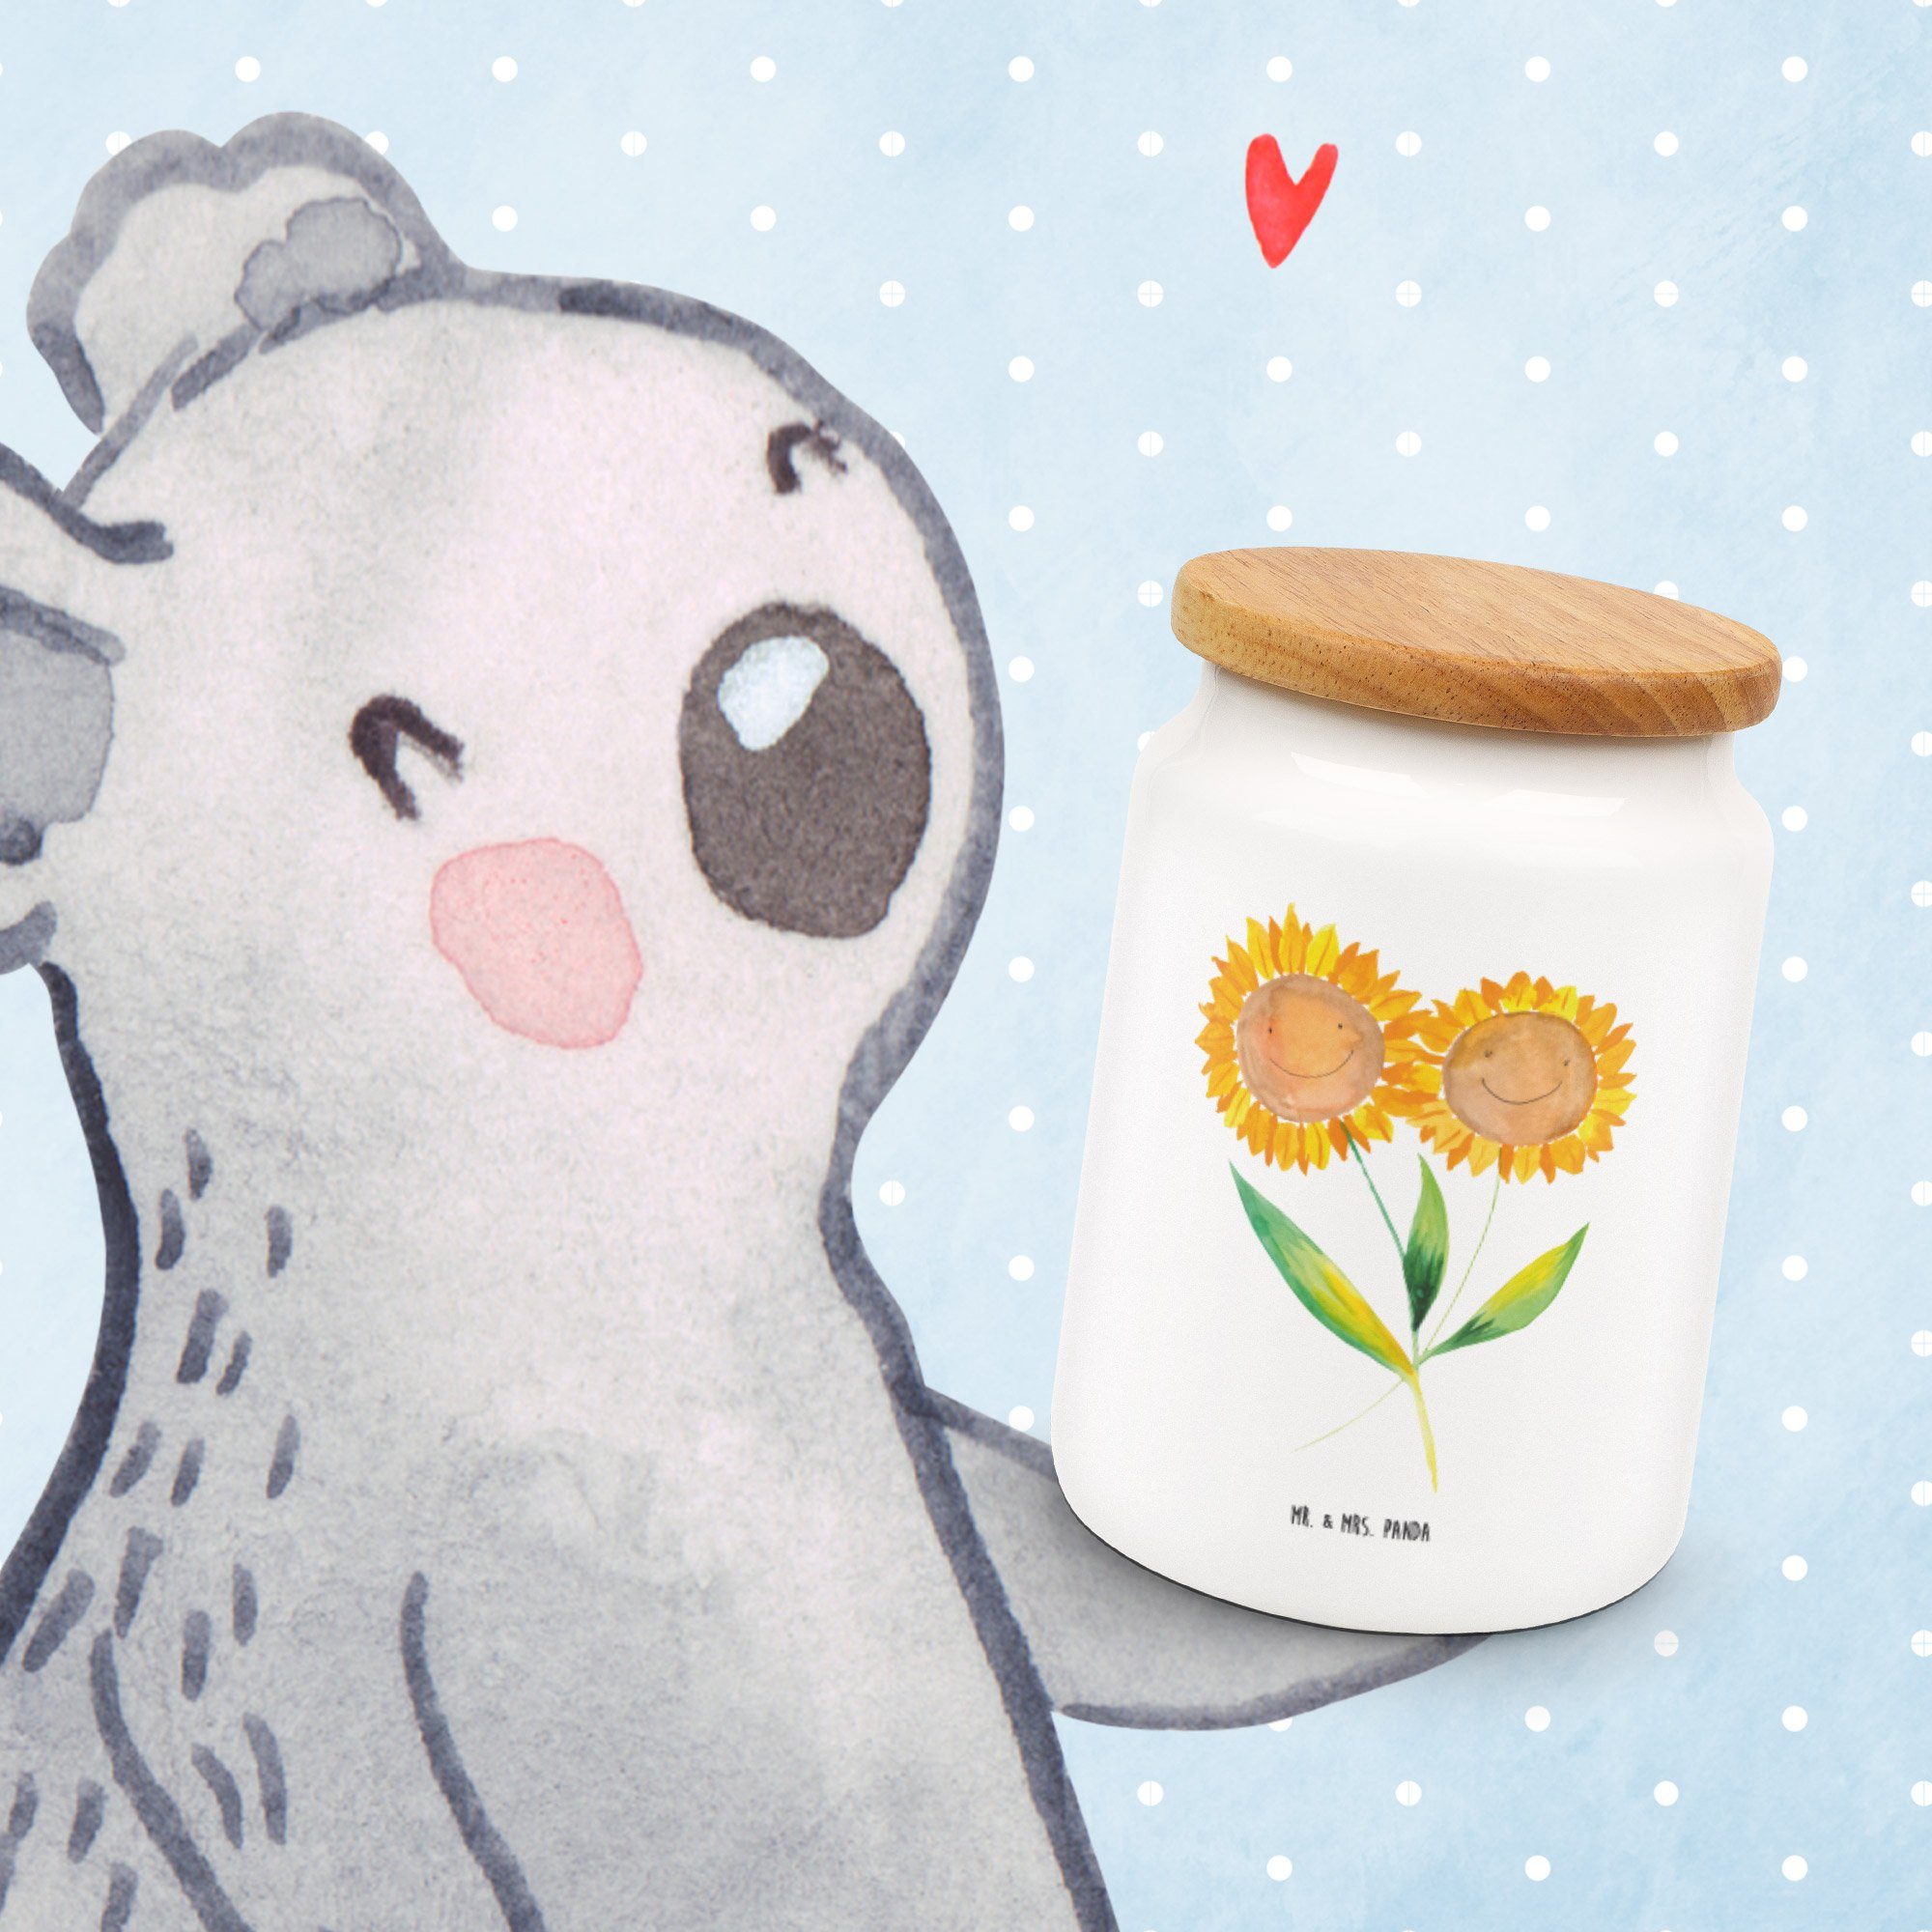 Mr. & Mrs. frien, Sonnenblume Panda - Weiß - Best Geschenk, Keksdose, (1-tlg) Vorratsdose Freundin, Keramik, Blumen